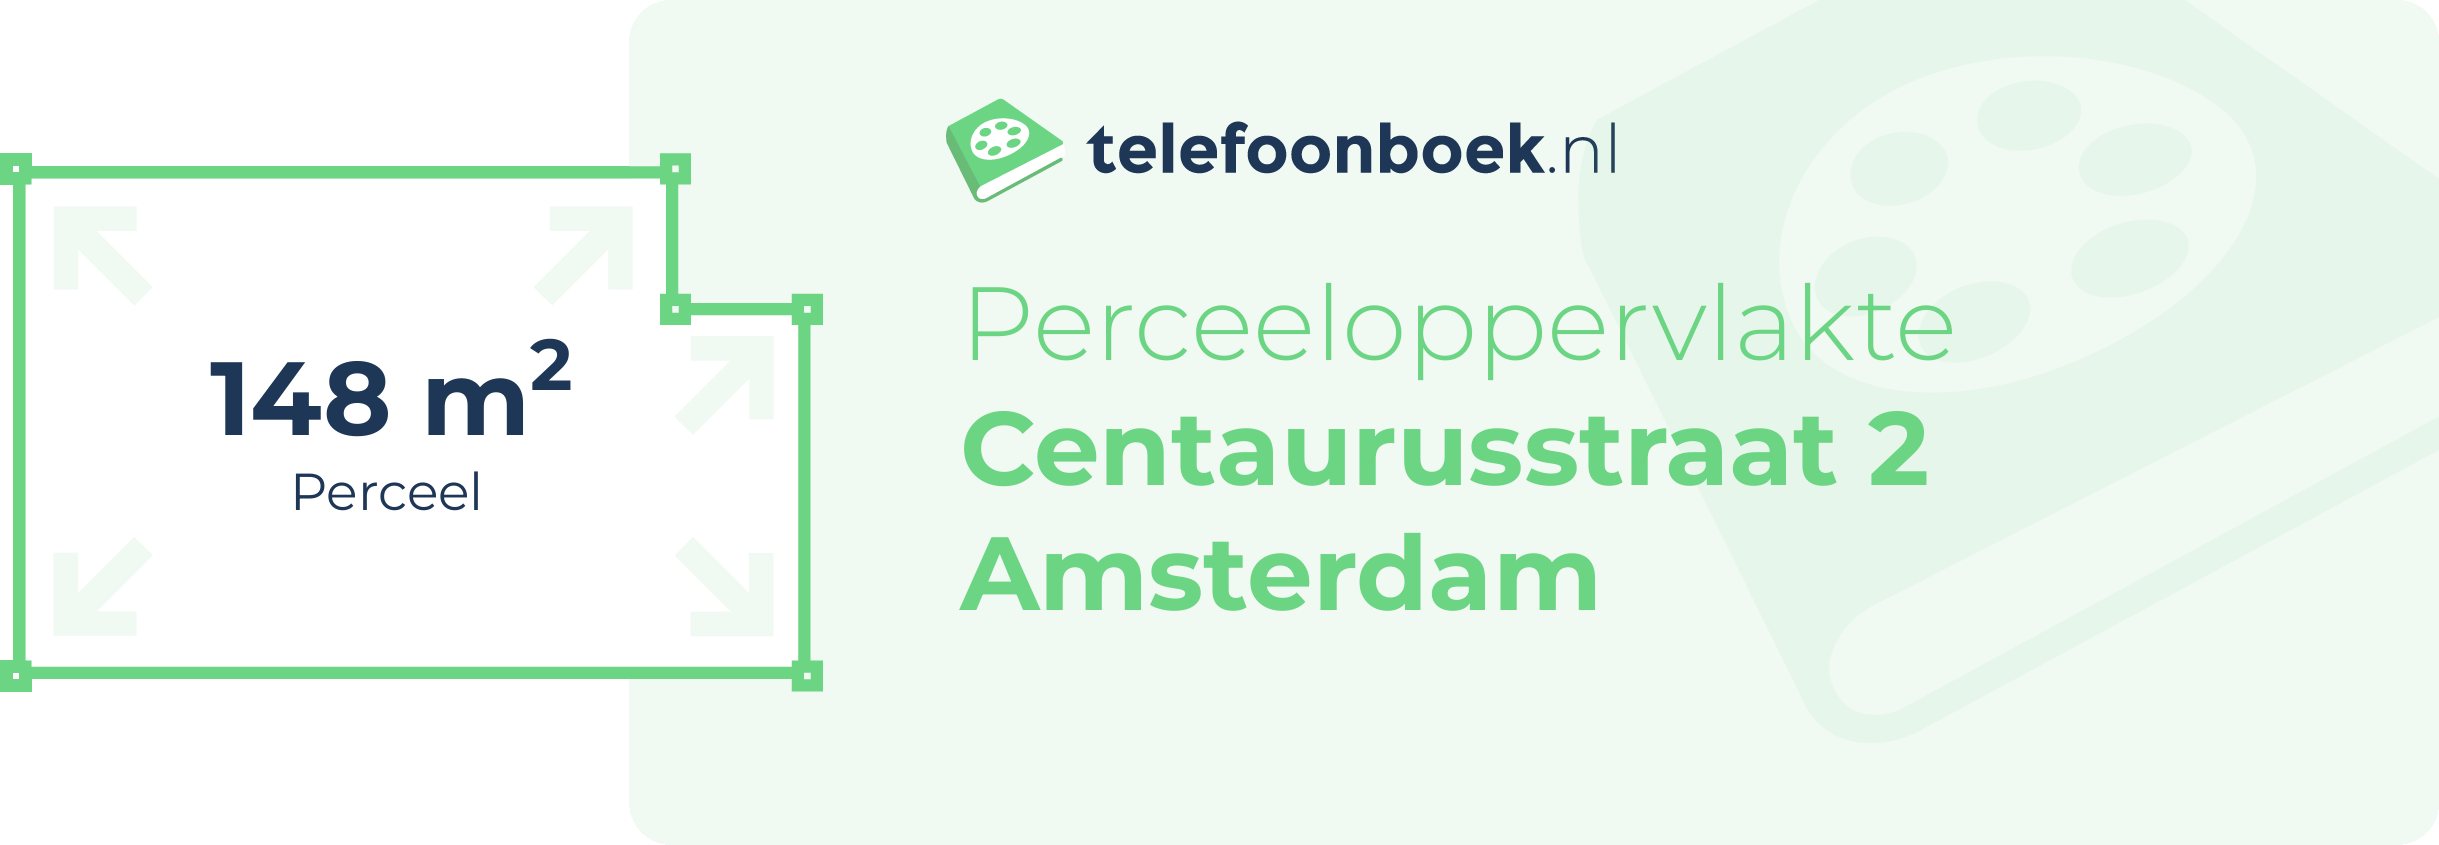 Perceeloppervlakte Centaurusstraat 2 Amsterdam